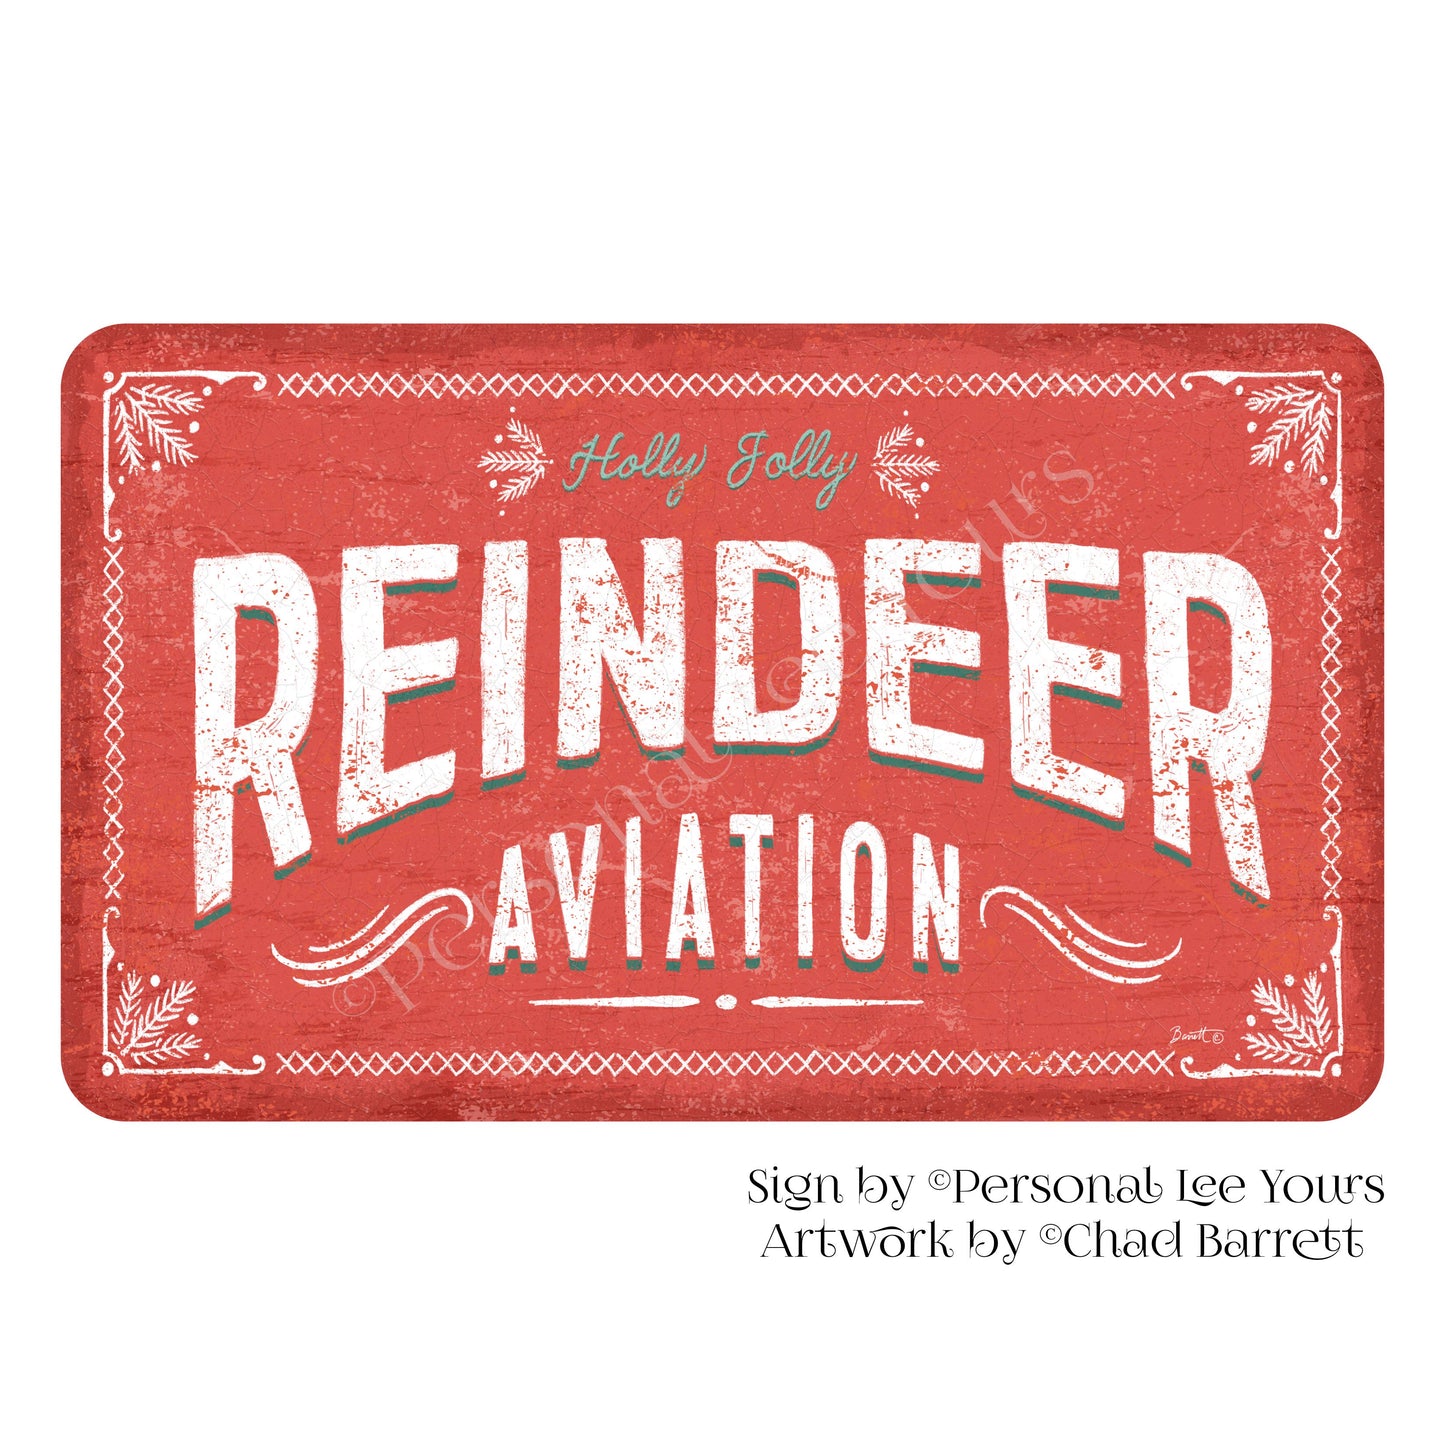 Chad Barrett Exclusive Sign * Reindeer Aviation * Horizontal * 4 Sizes * Lightweight Metal